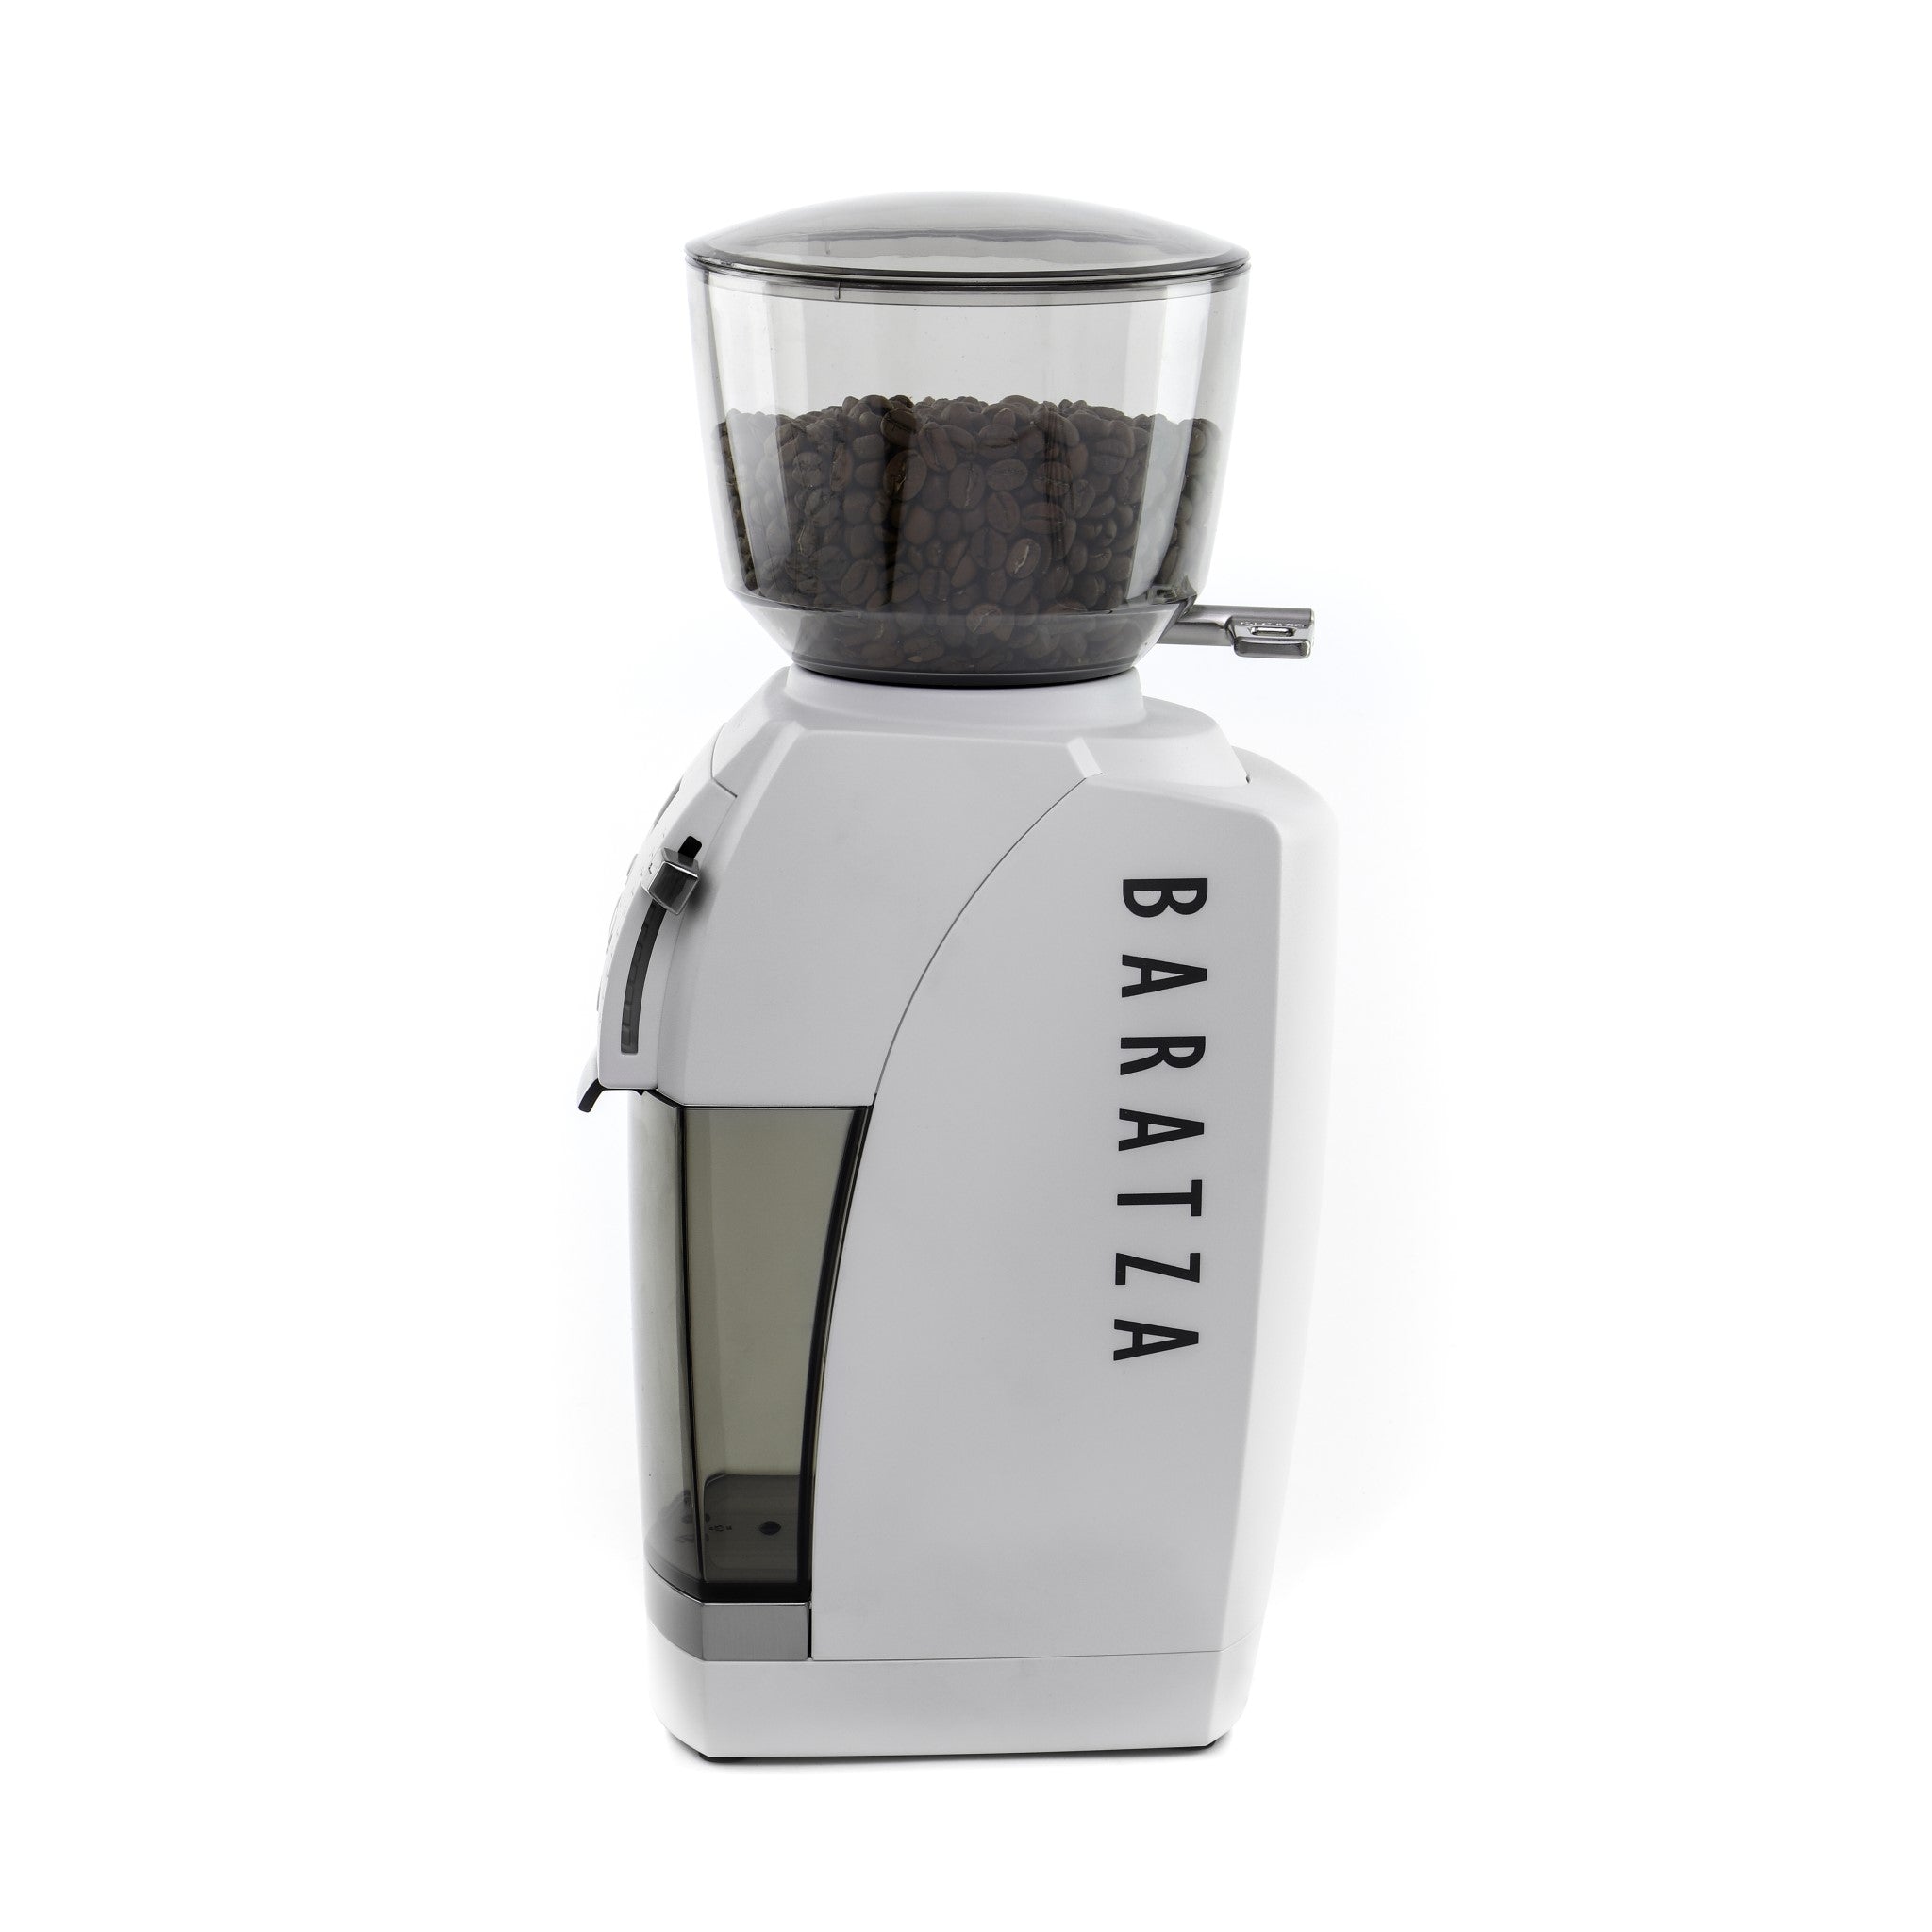 Baratza Encore Burr Coffee Grinder - Black